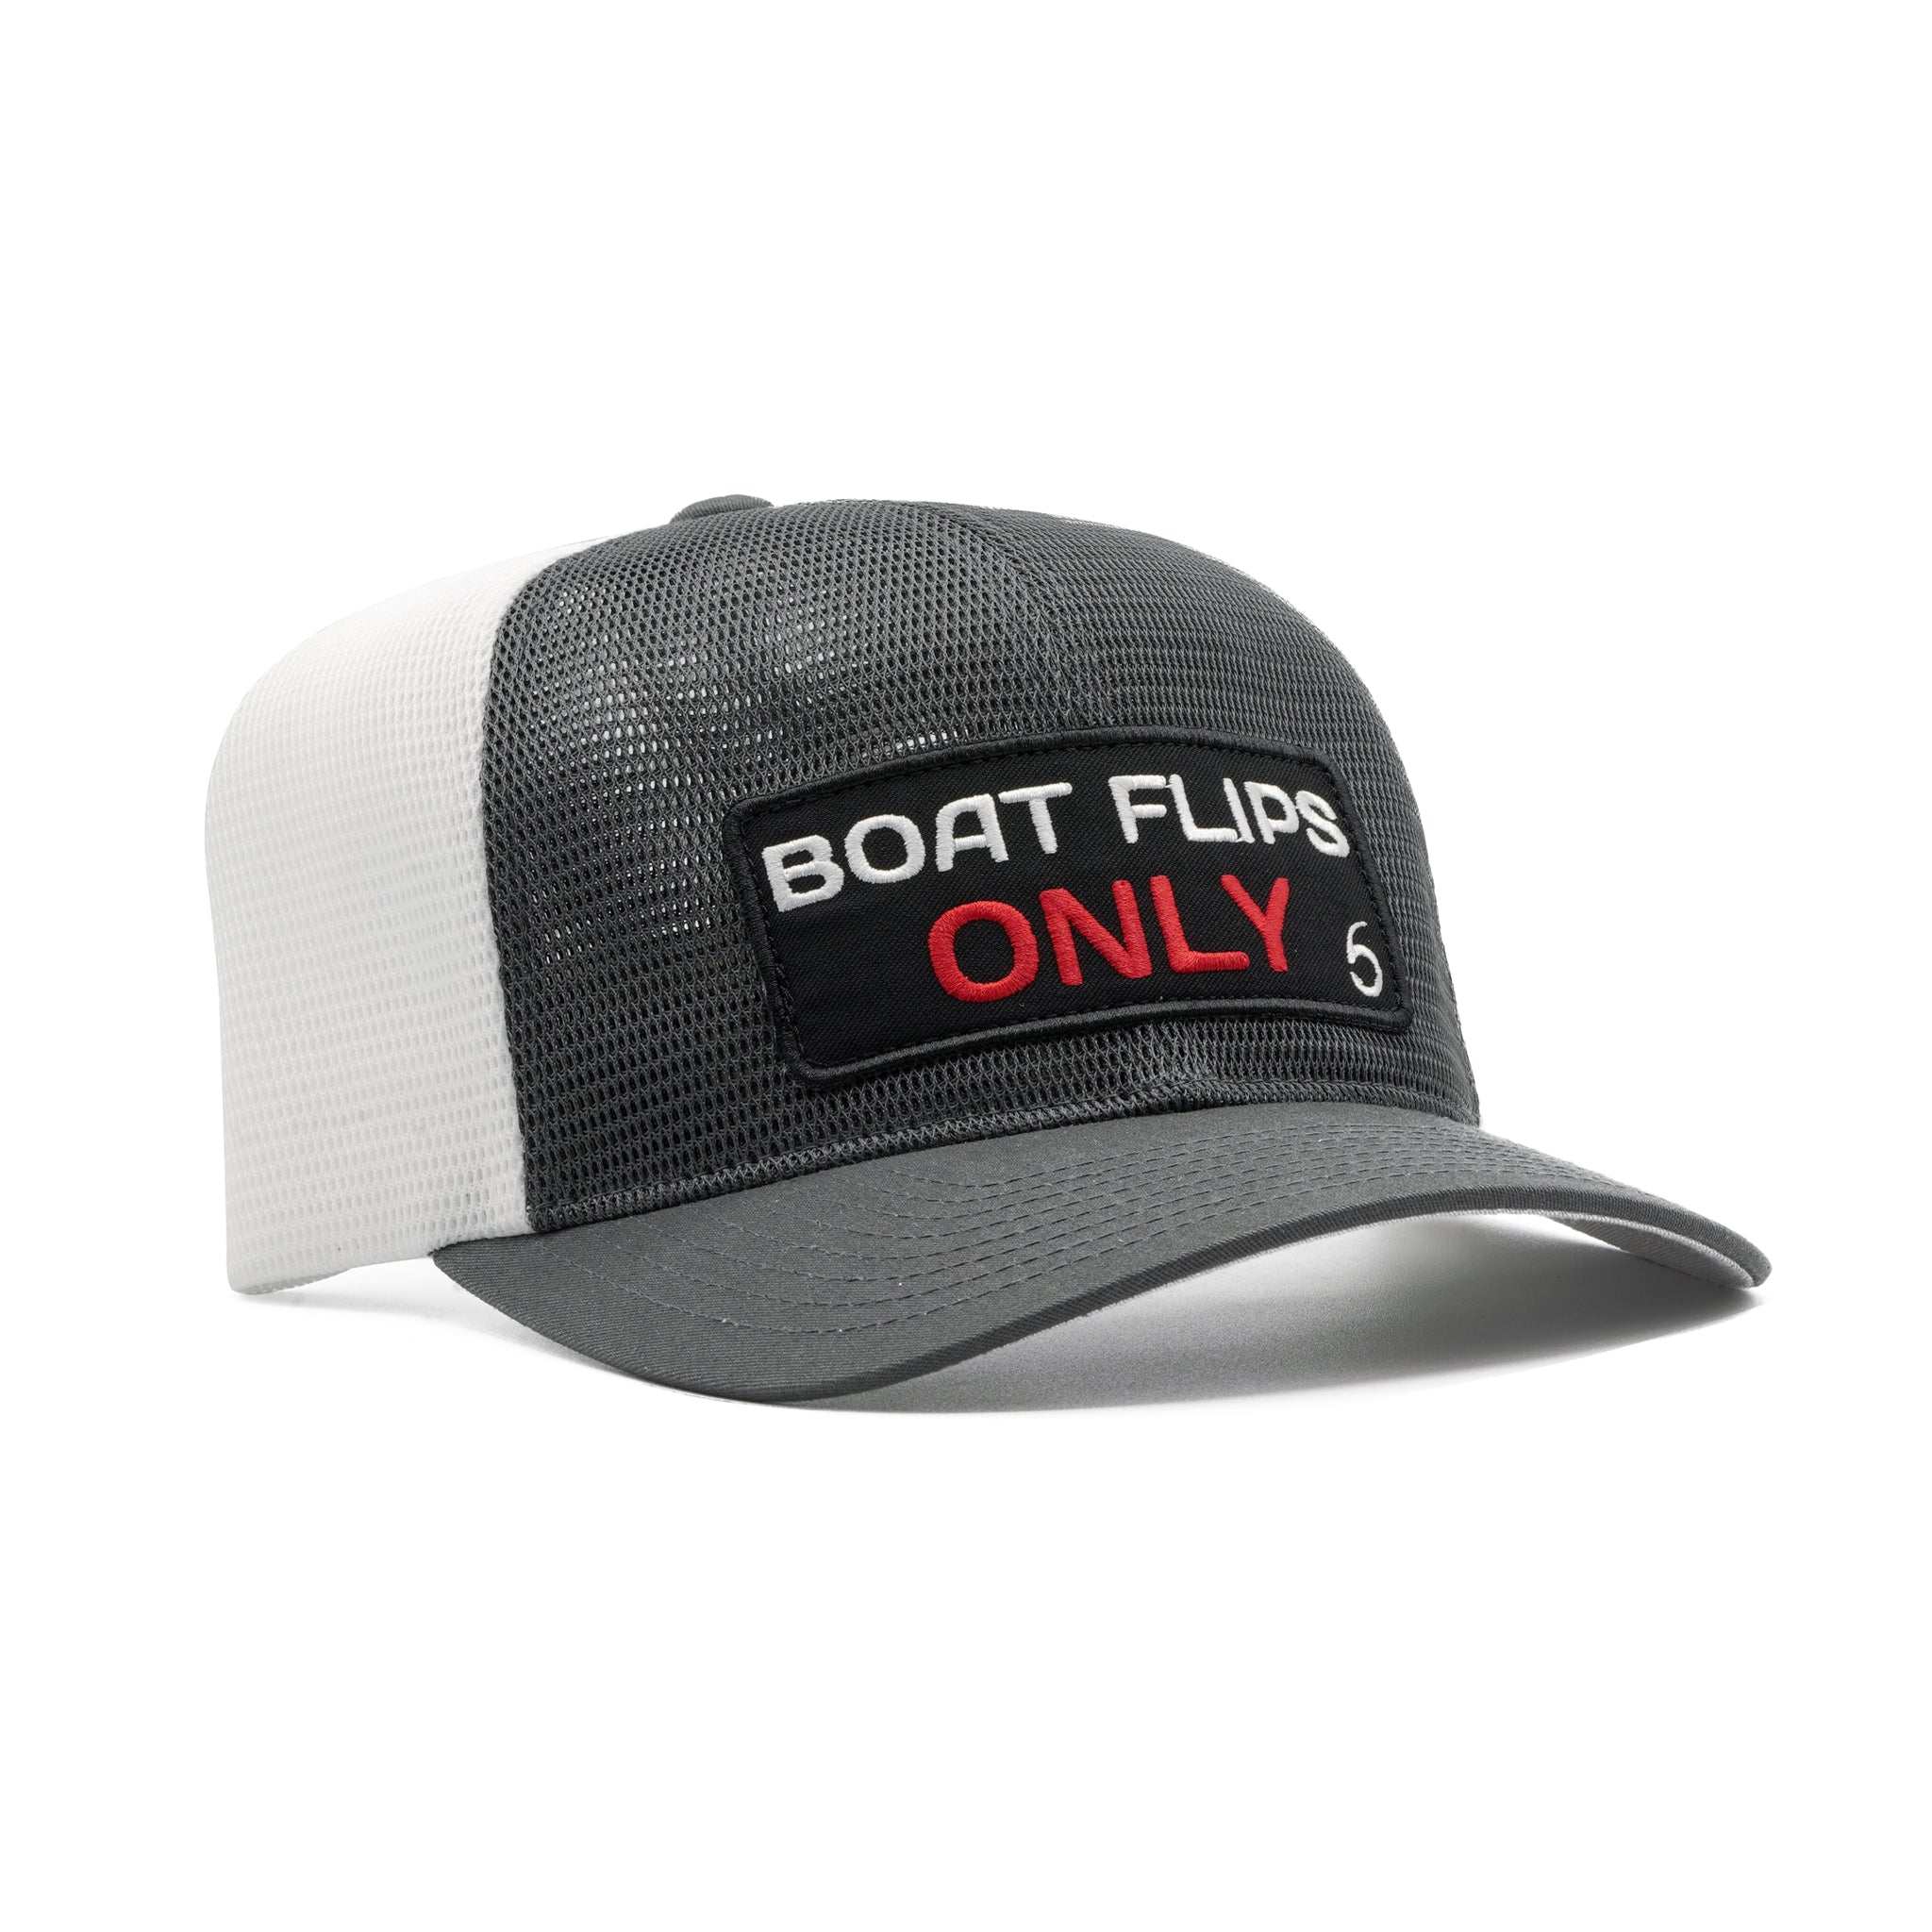 6th Sense Fishing - Premium Hats - Boat Flips Only - FishLite Mesh